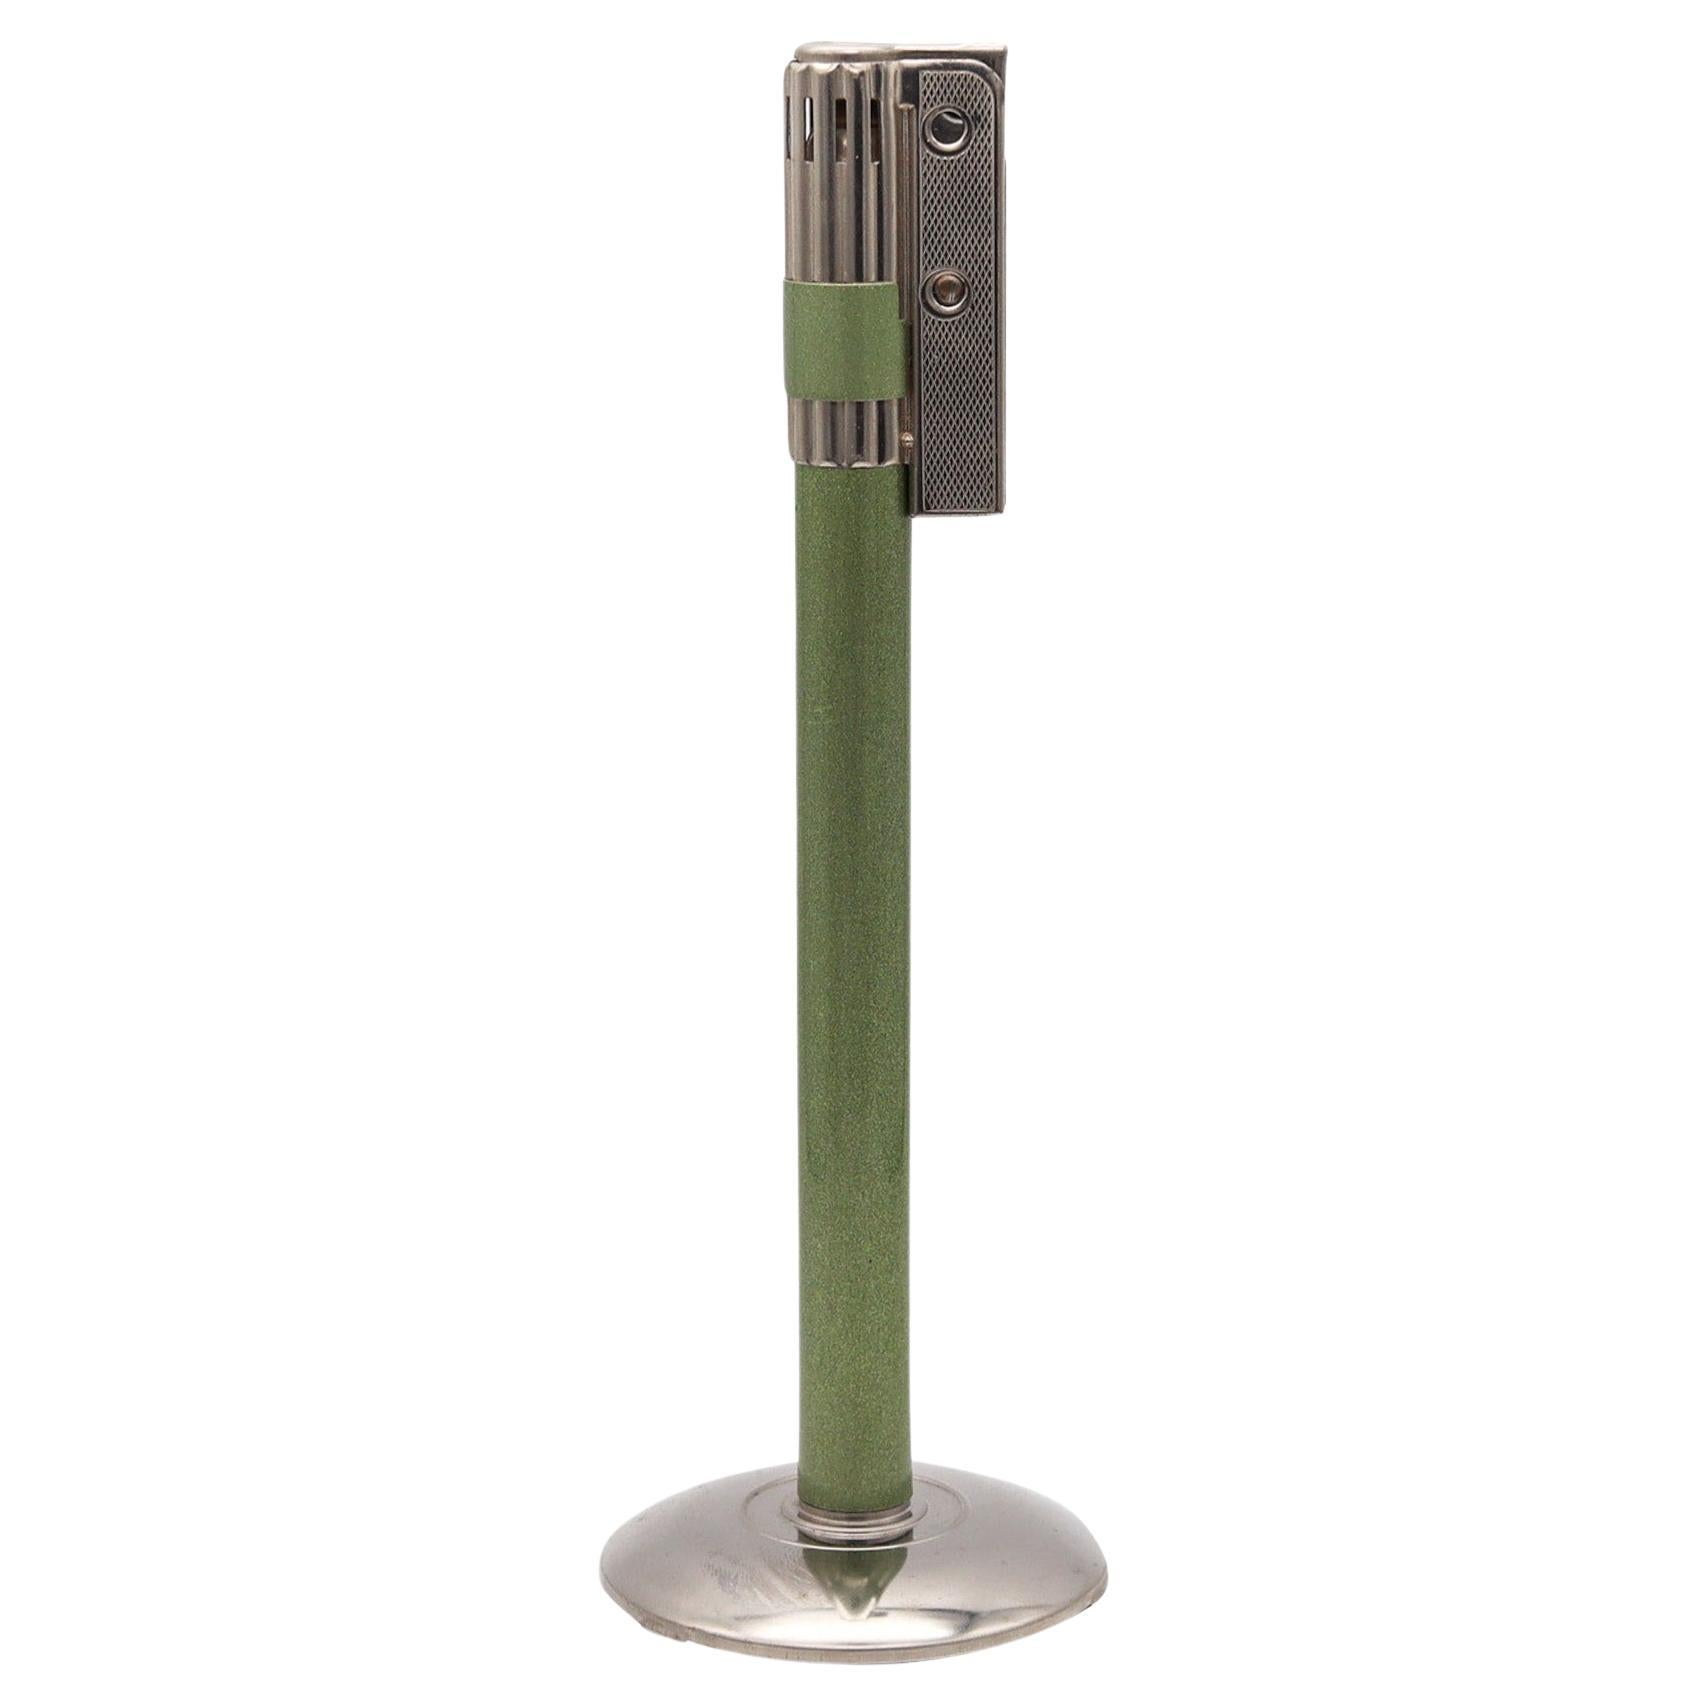 IMCO 6500 Table Petrol Lighter 1950 By Julius Franz Meister Green Chromed Steel For Sale